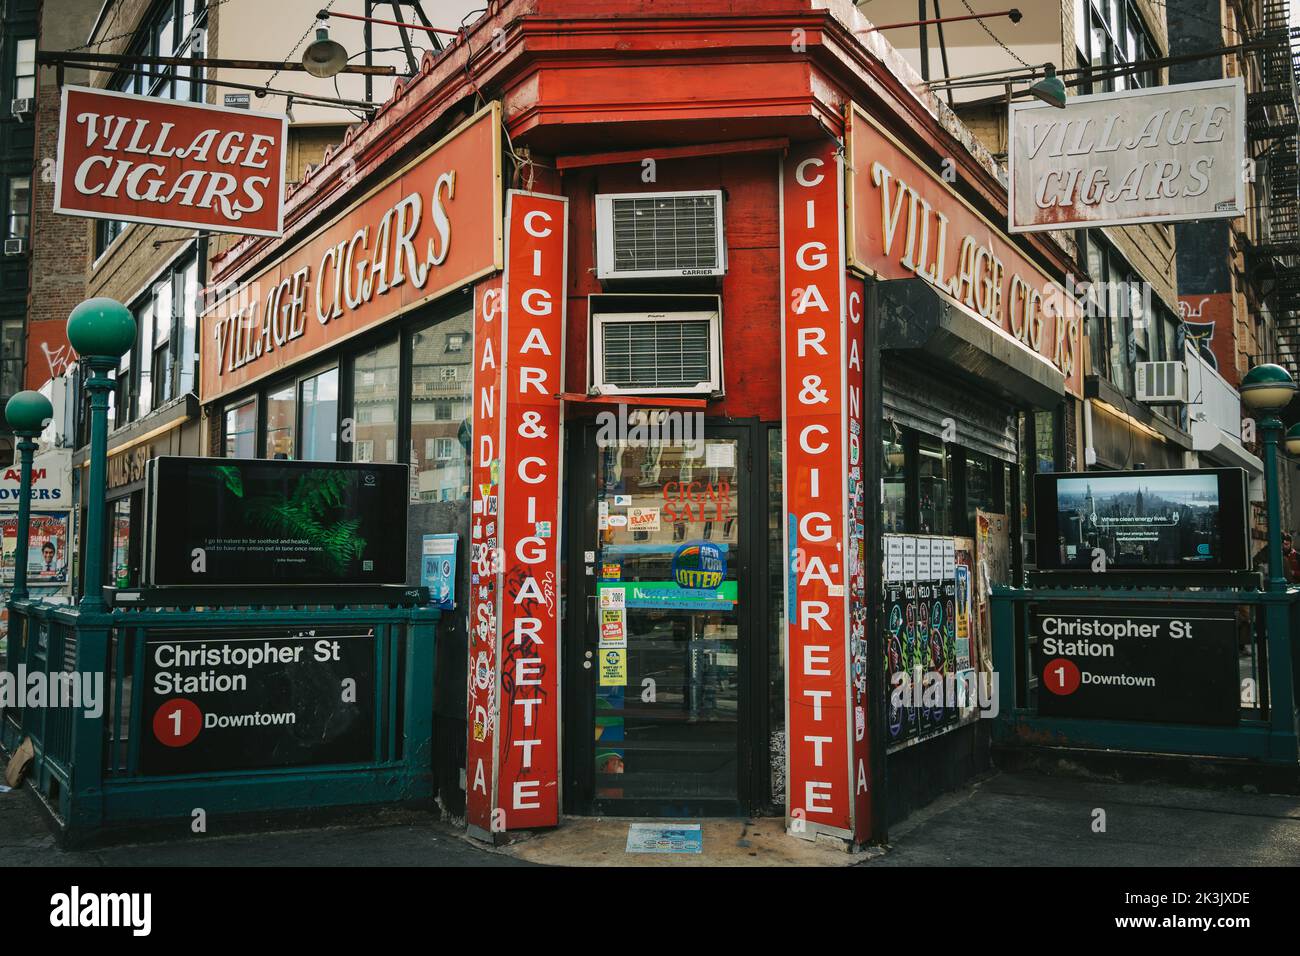 Village Cigars vintage sign in the West Village, Manhattan, New York Stock Photo